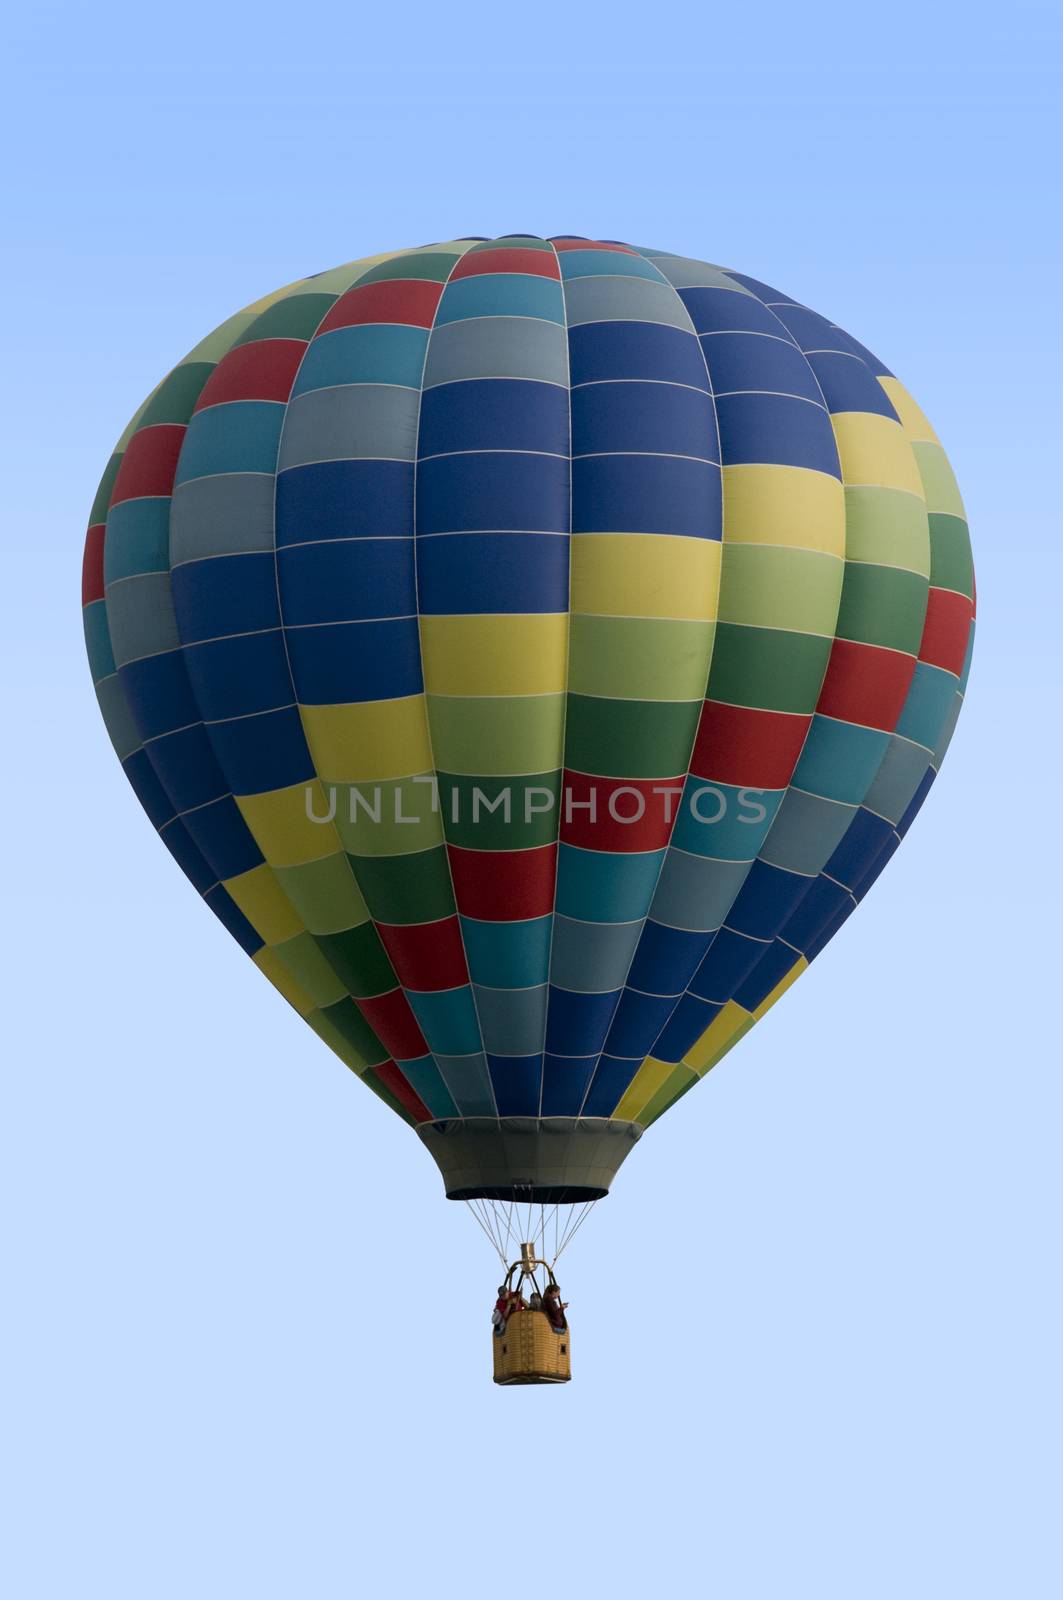 Hot Air Balloon Against Blue Sky by Balefire9